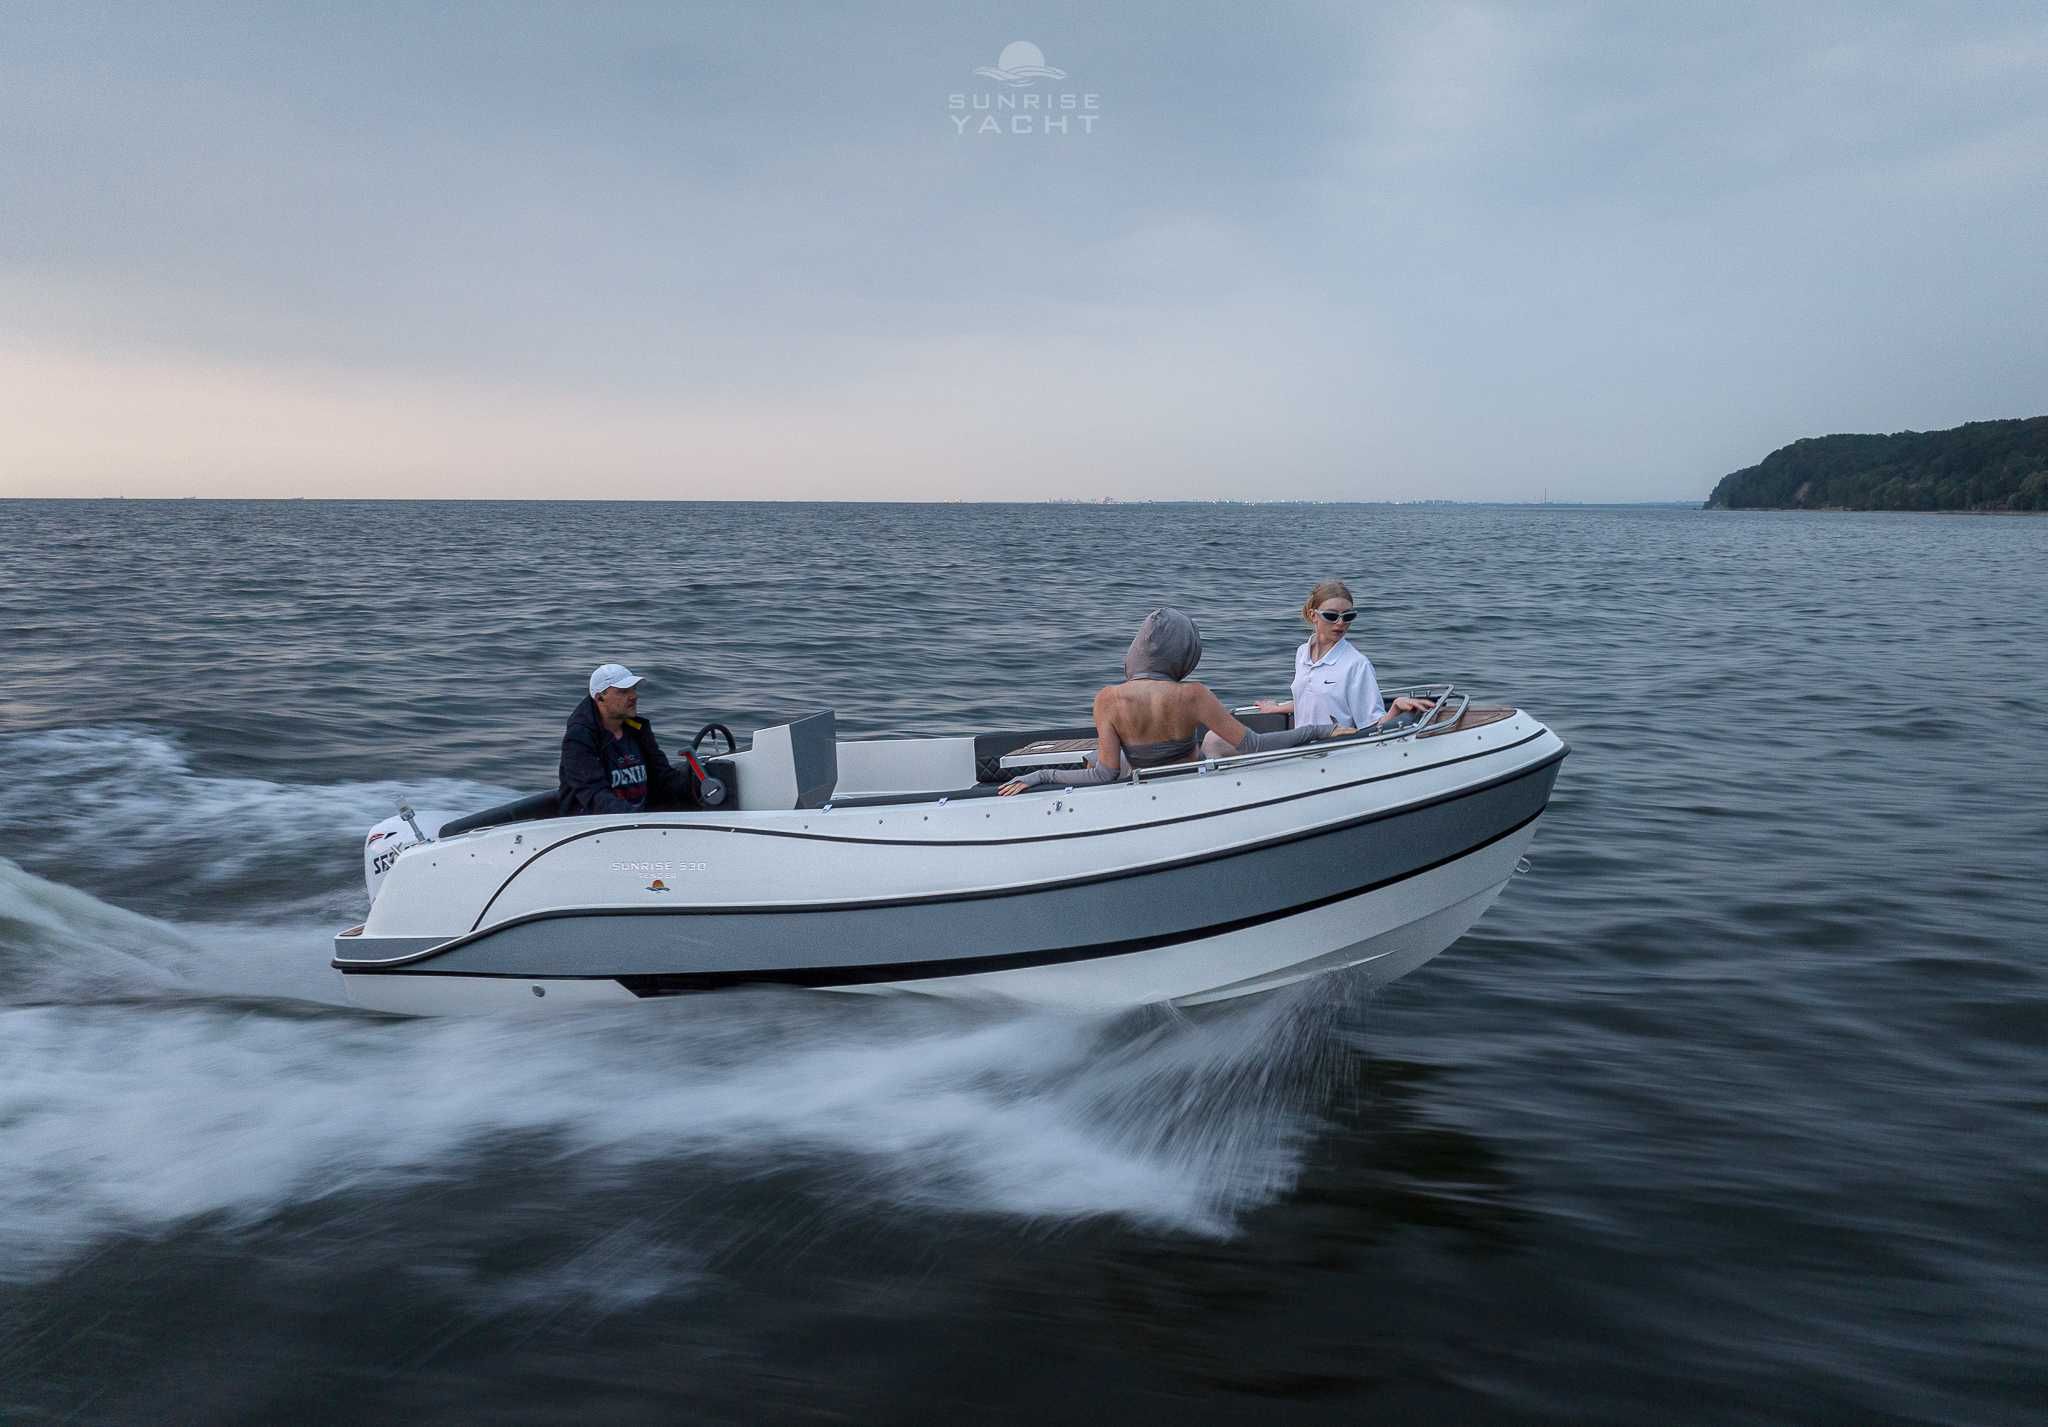 Nowa łódź dostępna od ręki - Sunrise 530 Tender - NA 8 OSÓB !!!